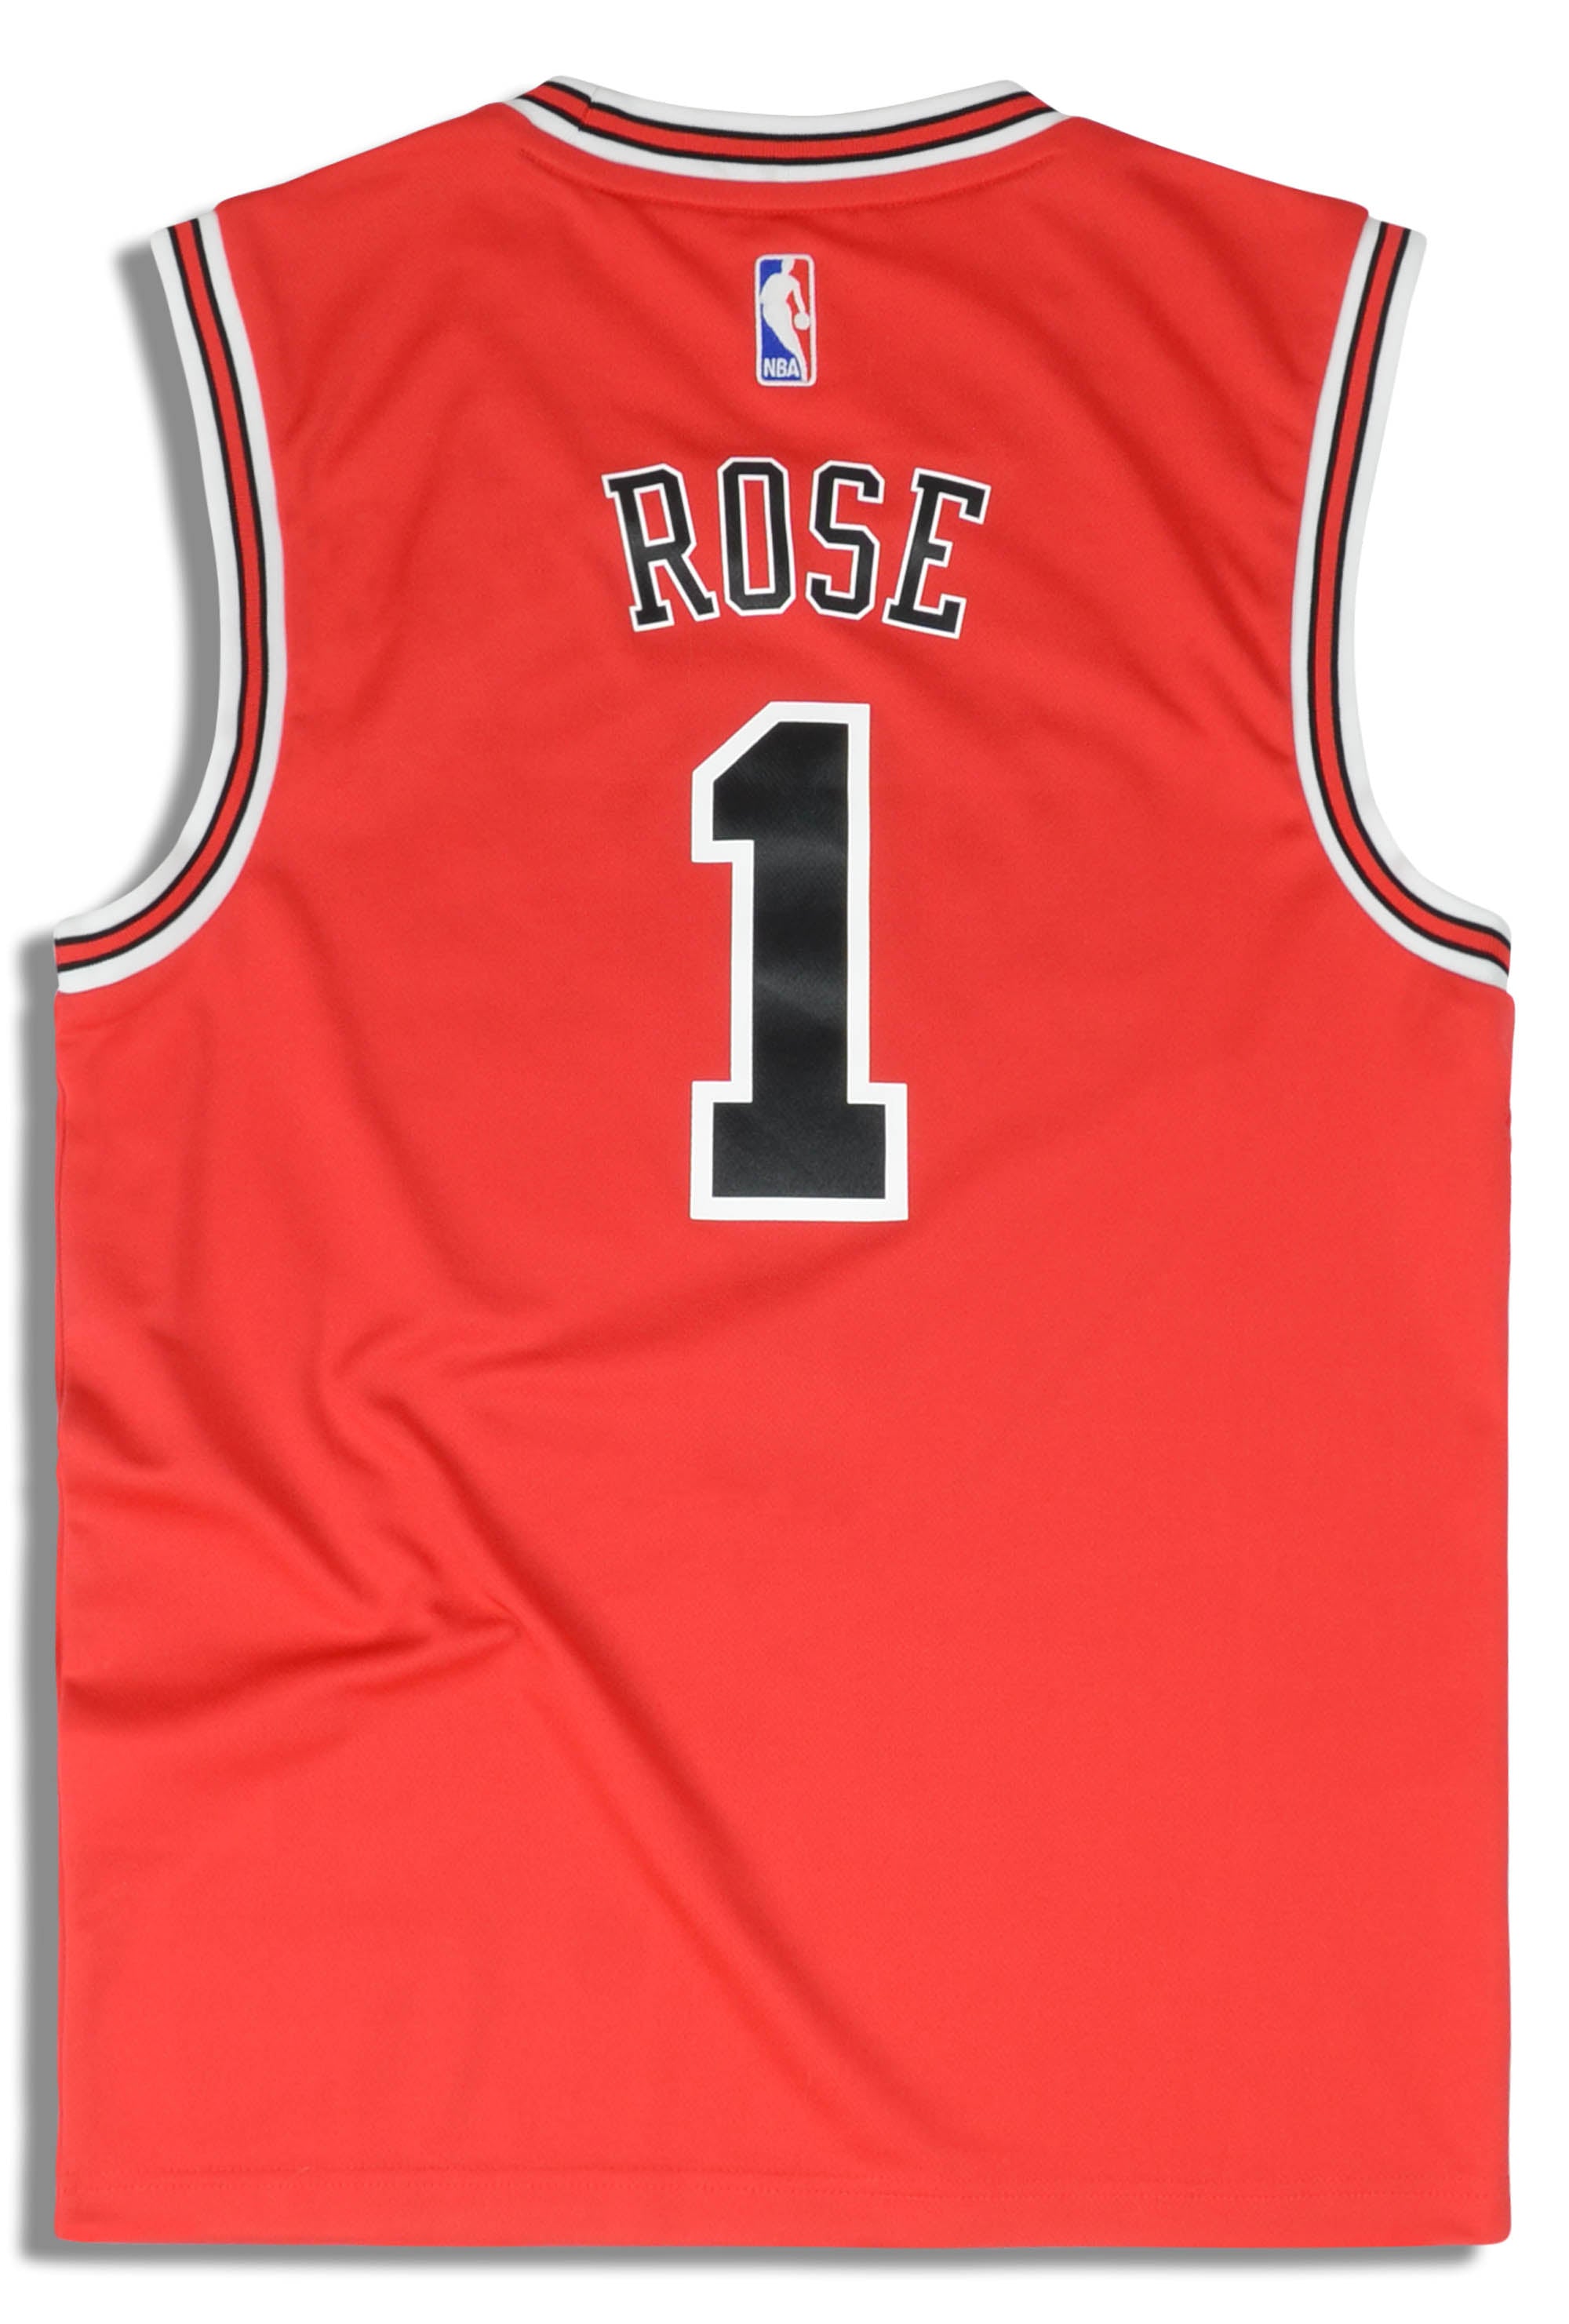 Chicago Bulls Rare Derrick Rose Nike Jersey